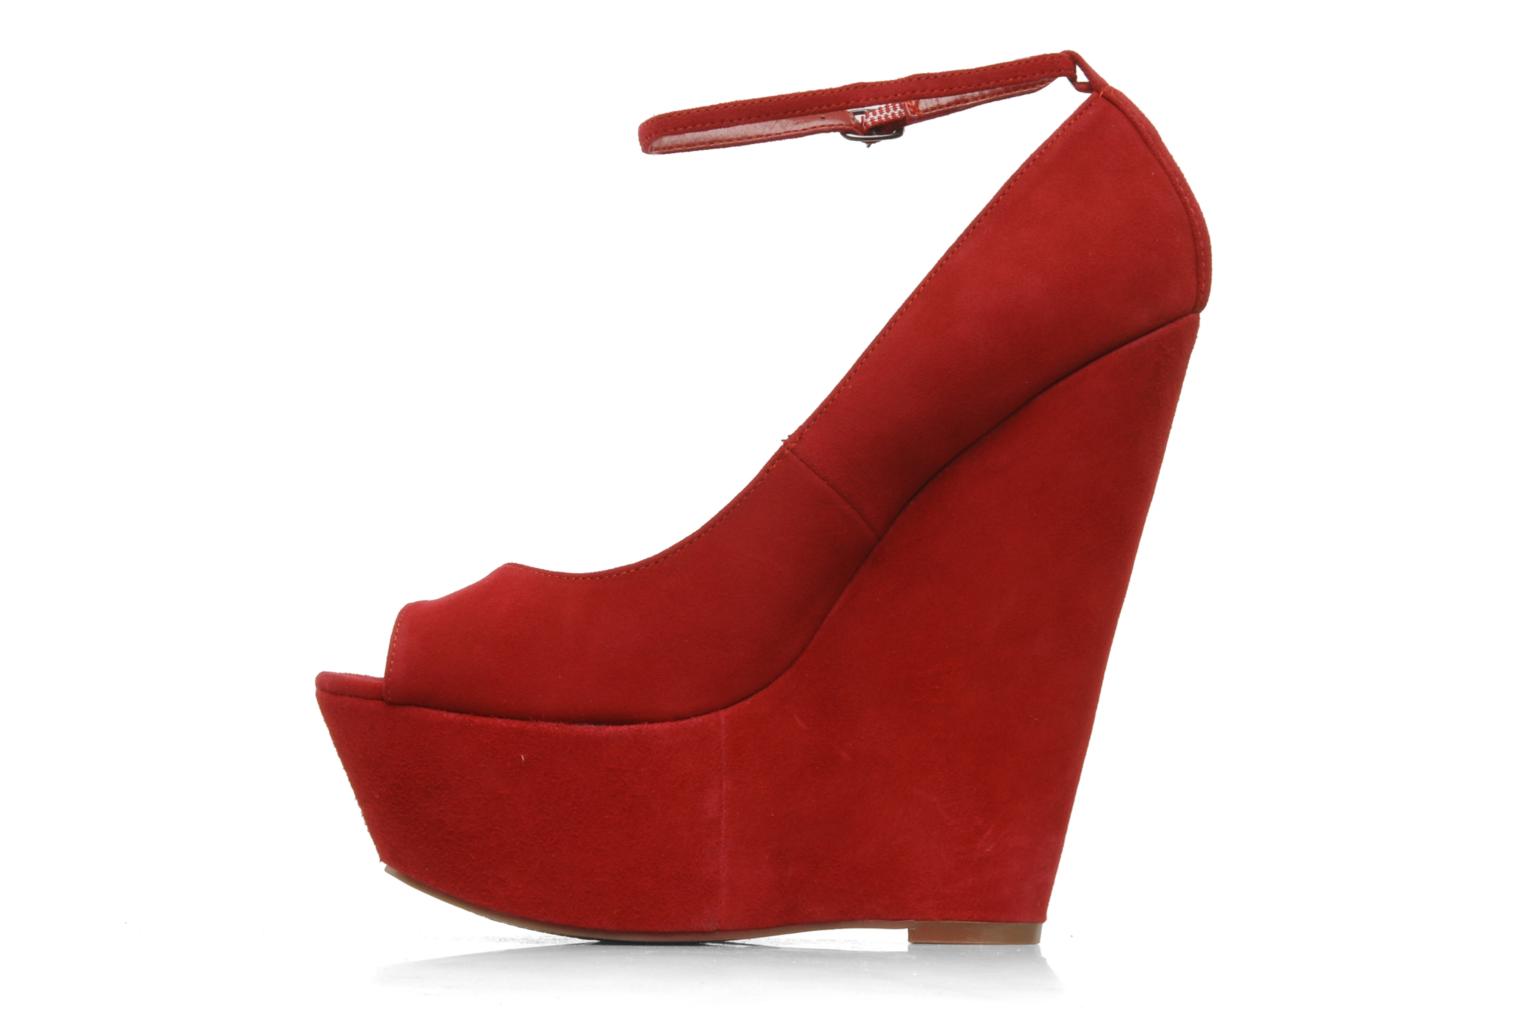 Carvela Grass High heels in Red at Sarenza.co.uk (78940)